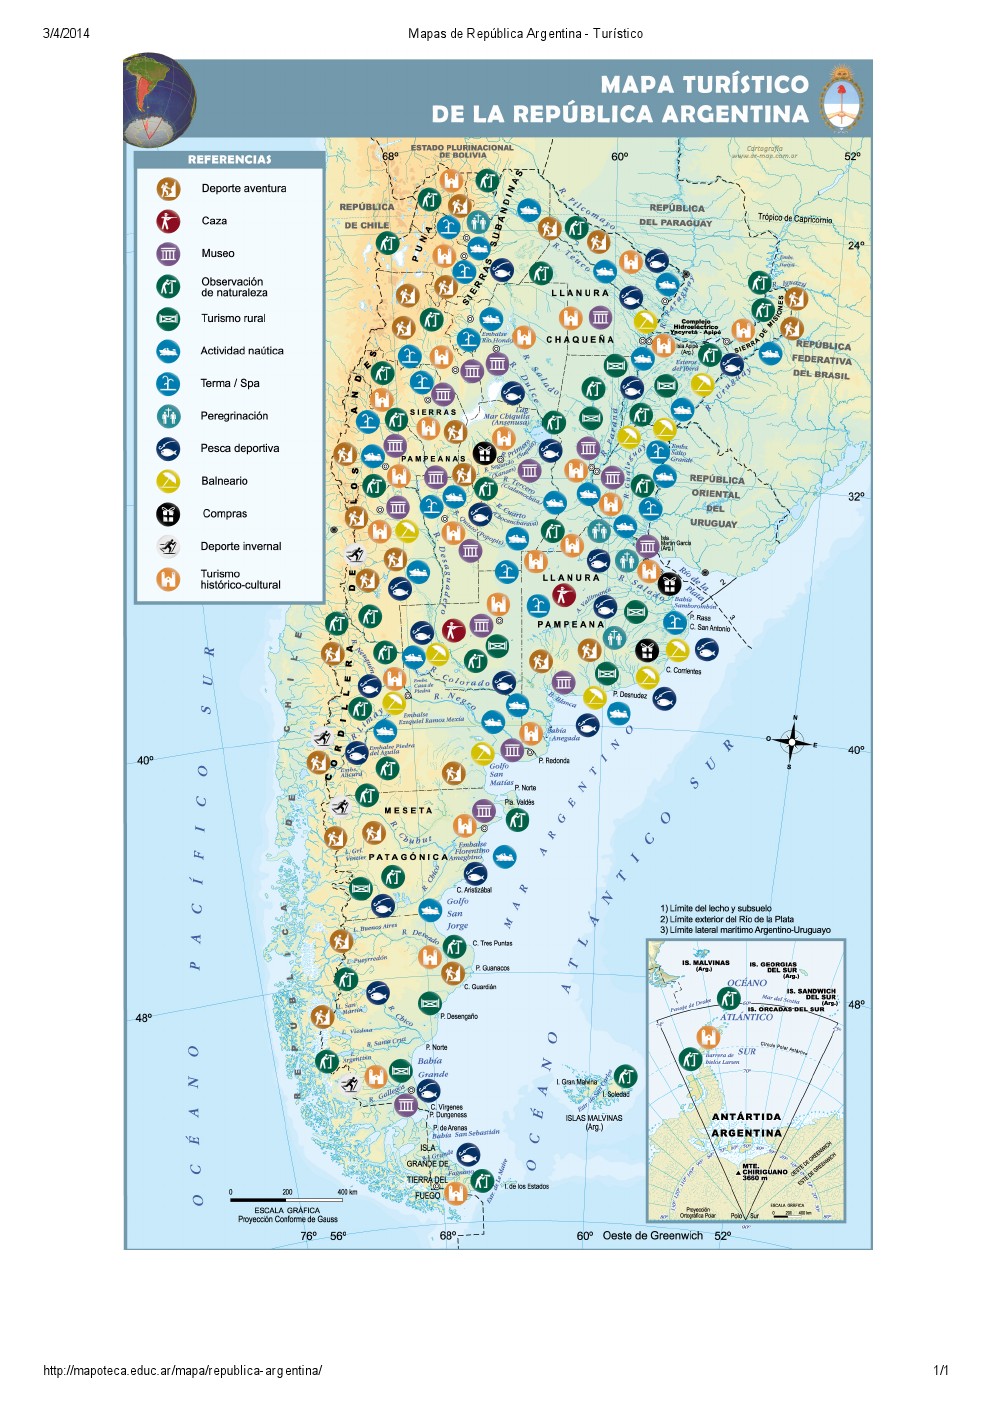 Mapa turístico de Argentina. Mapoteca de Educ.ar